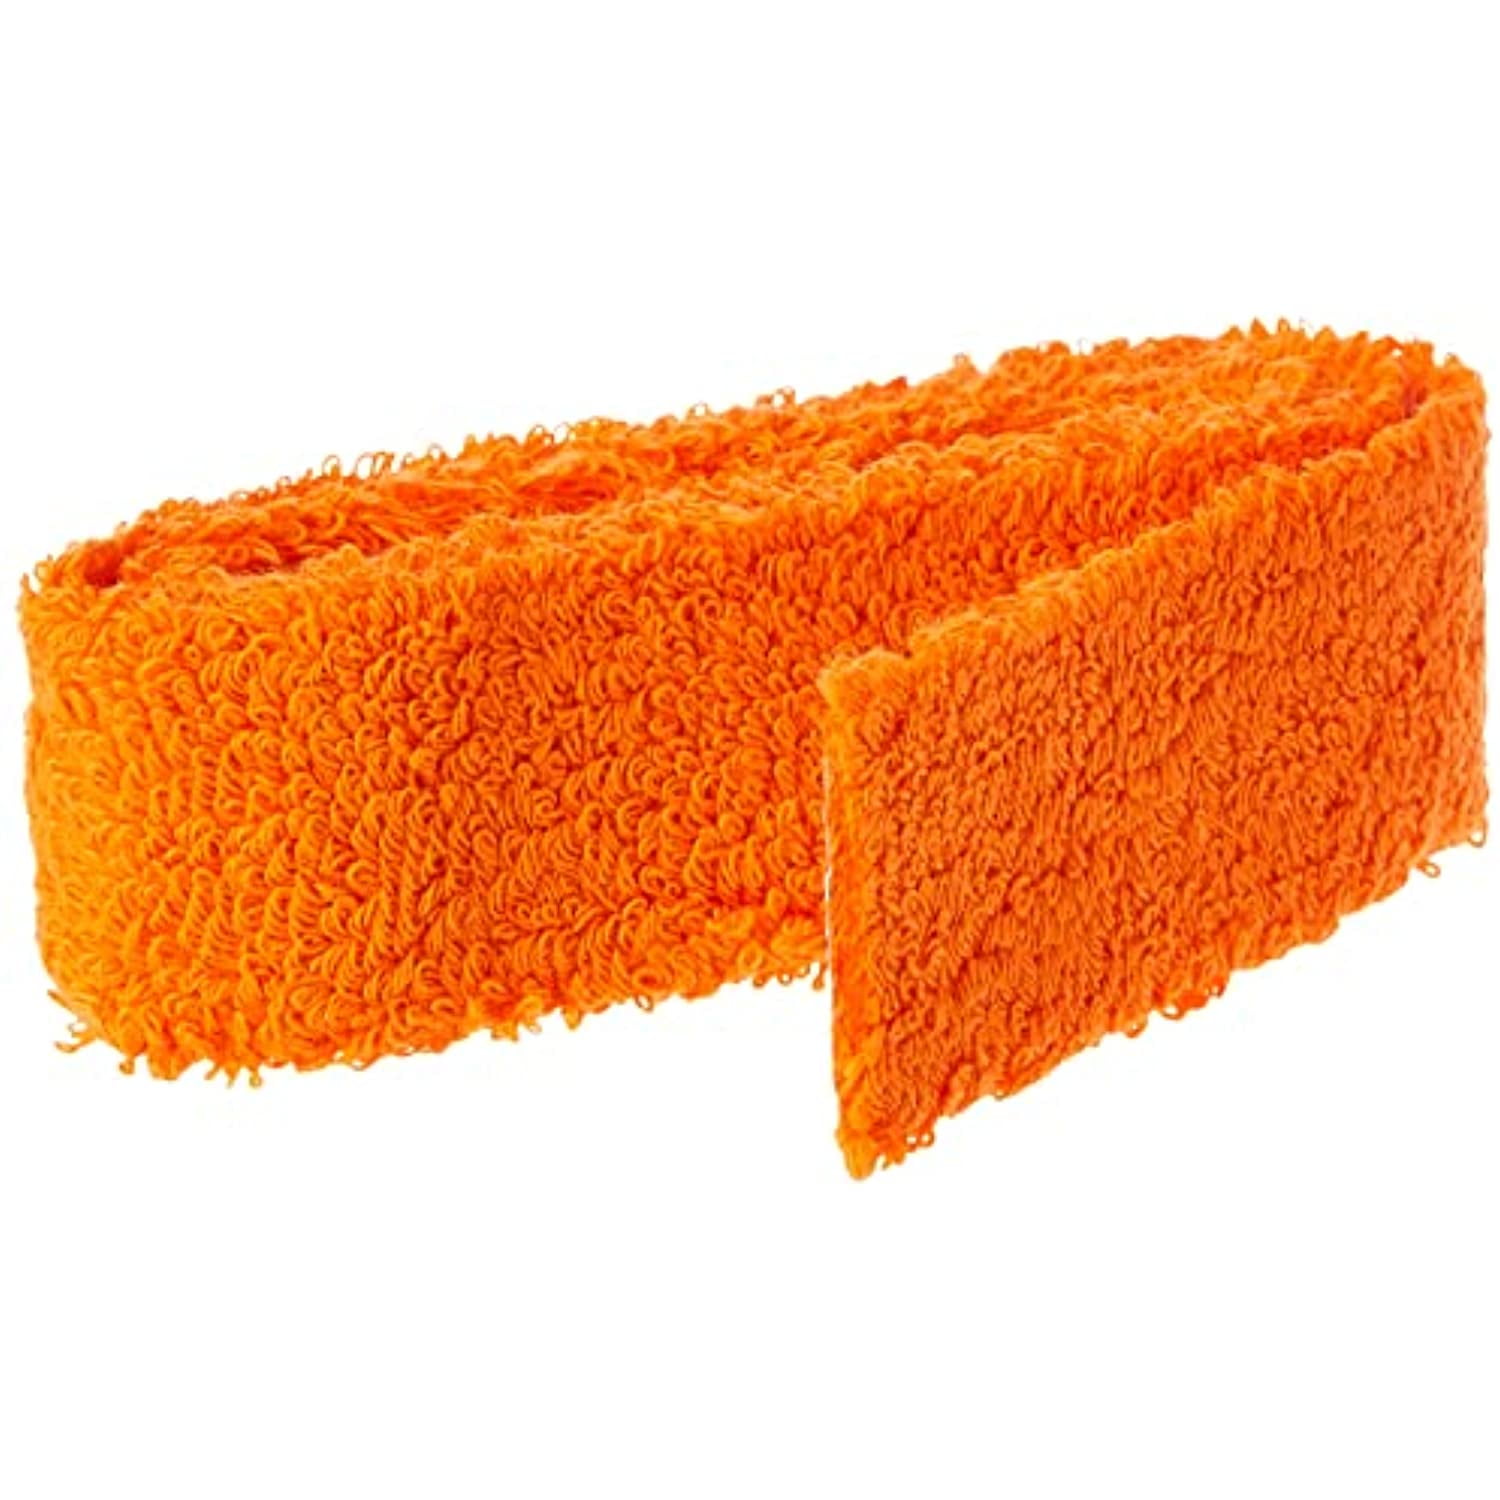 YONEX AC402EX Towel Grip-orange 